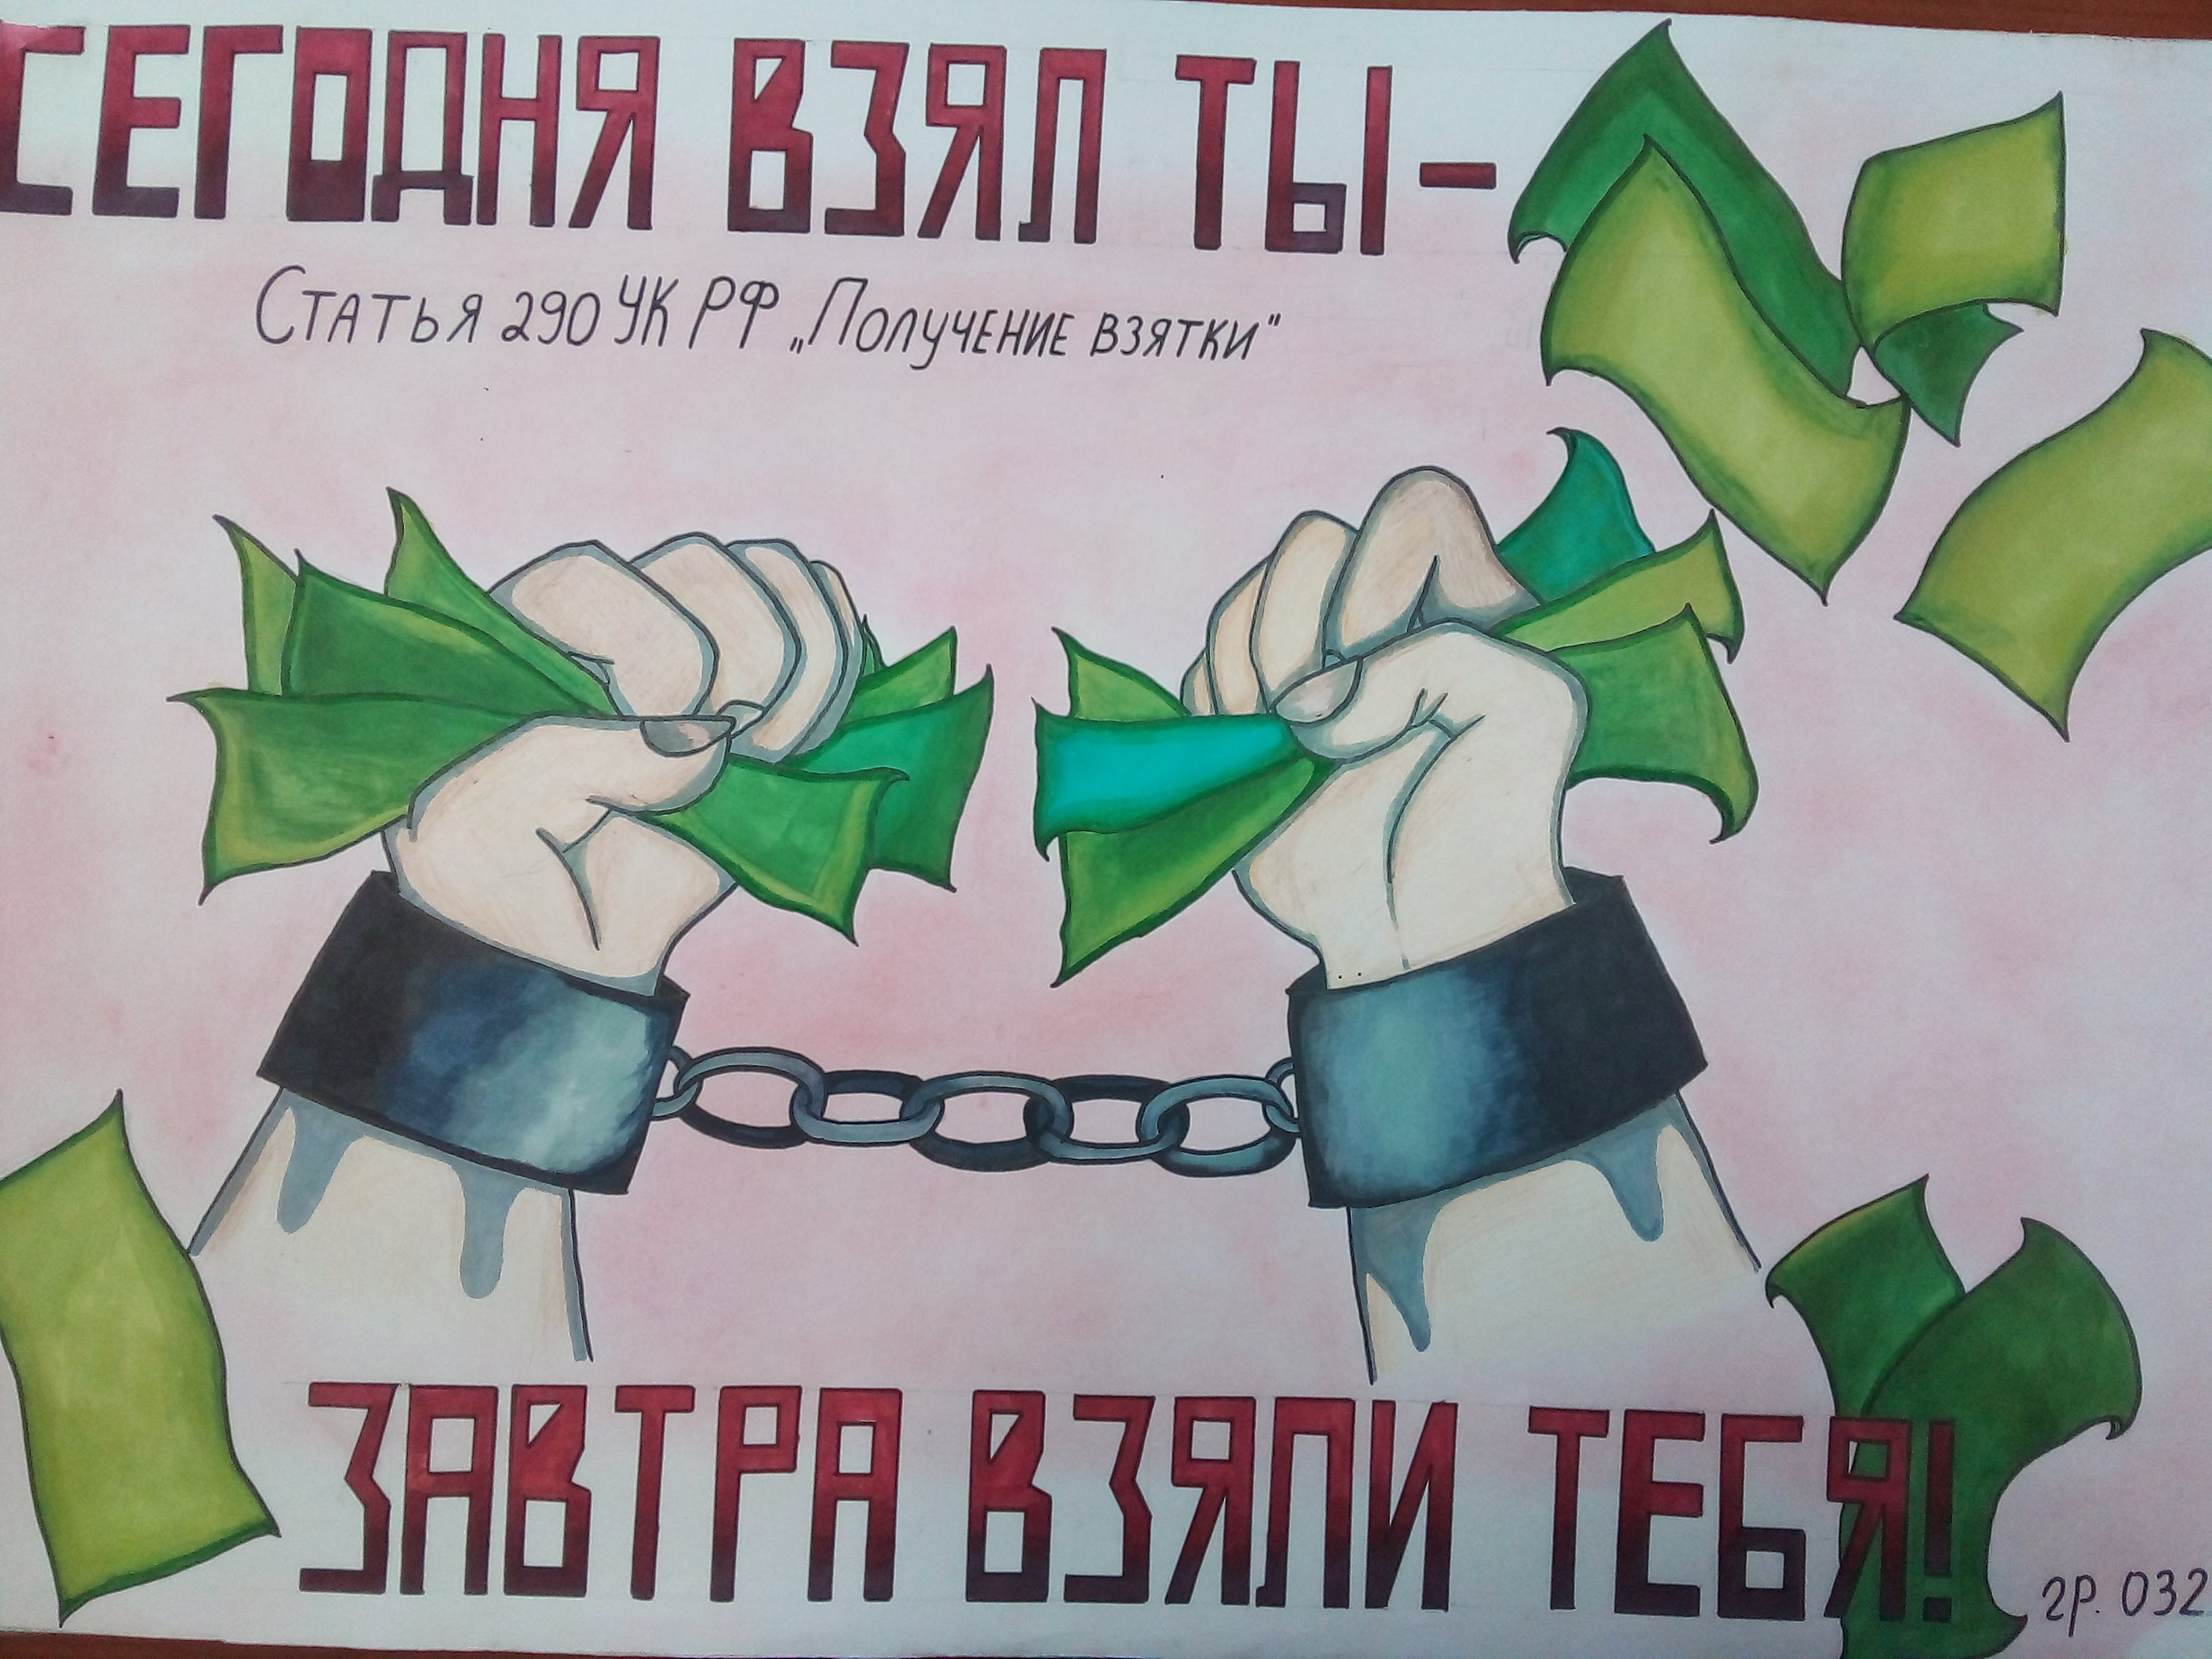 stop korrupciya 7